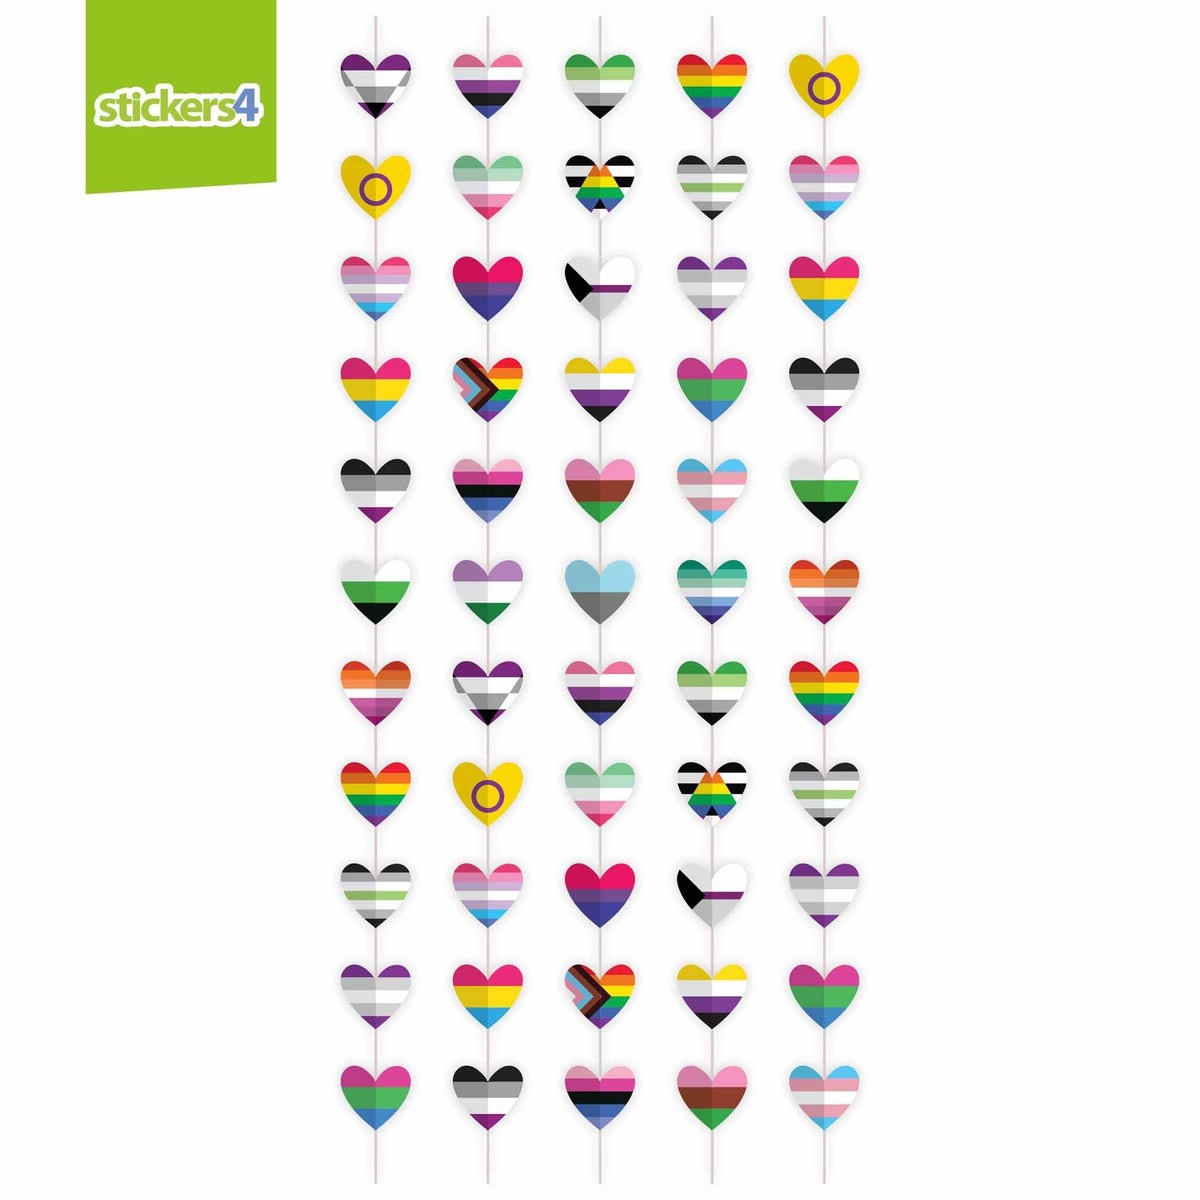 Paper-Style Pride Heart String Window Stickers Pride Window Displays